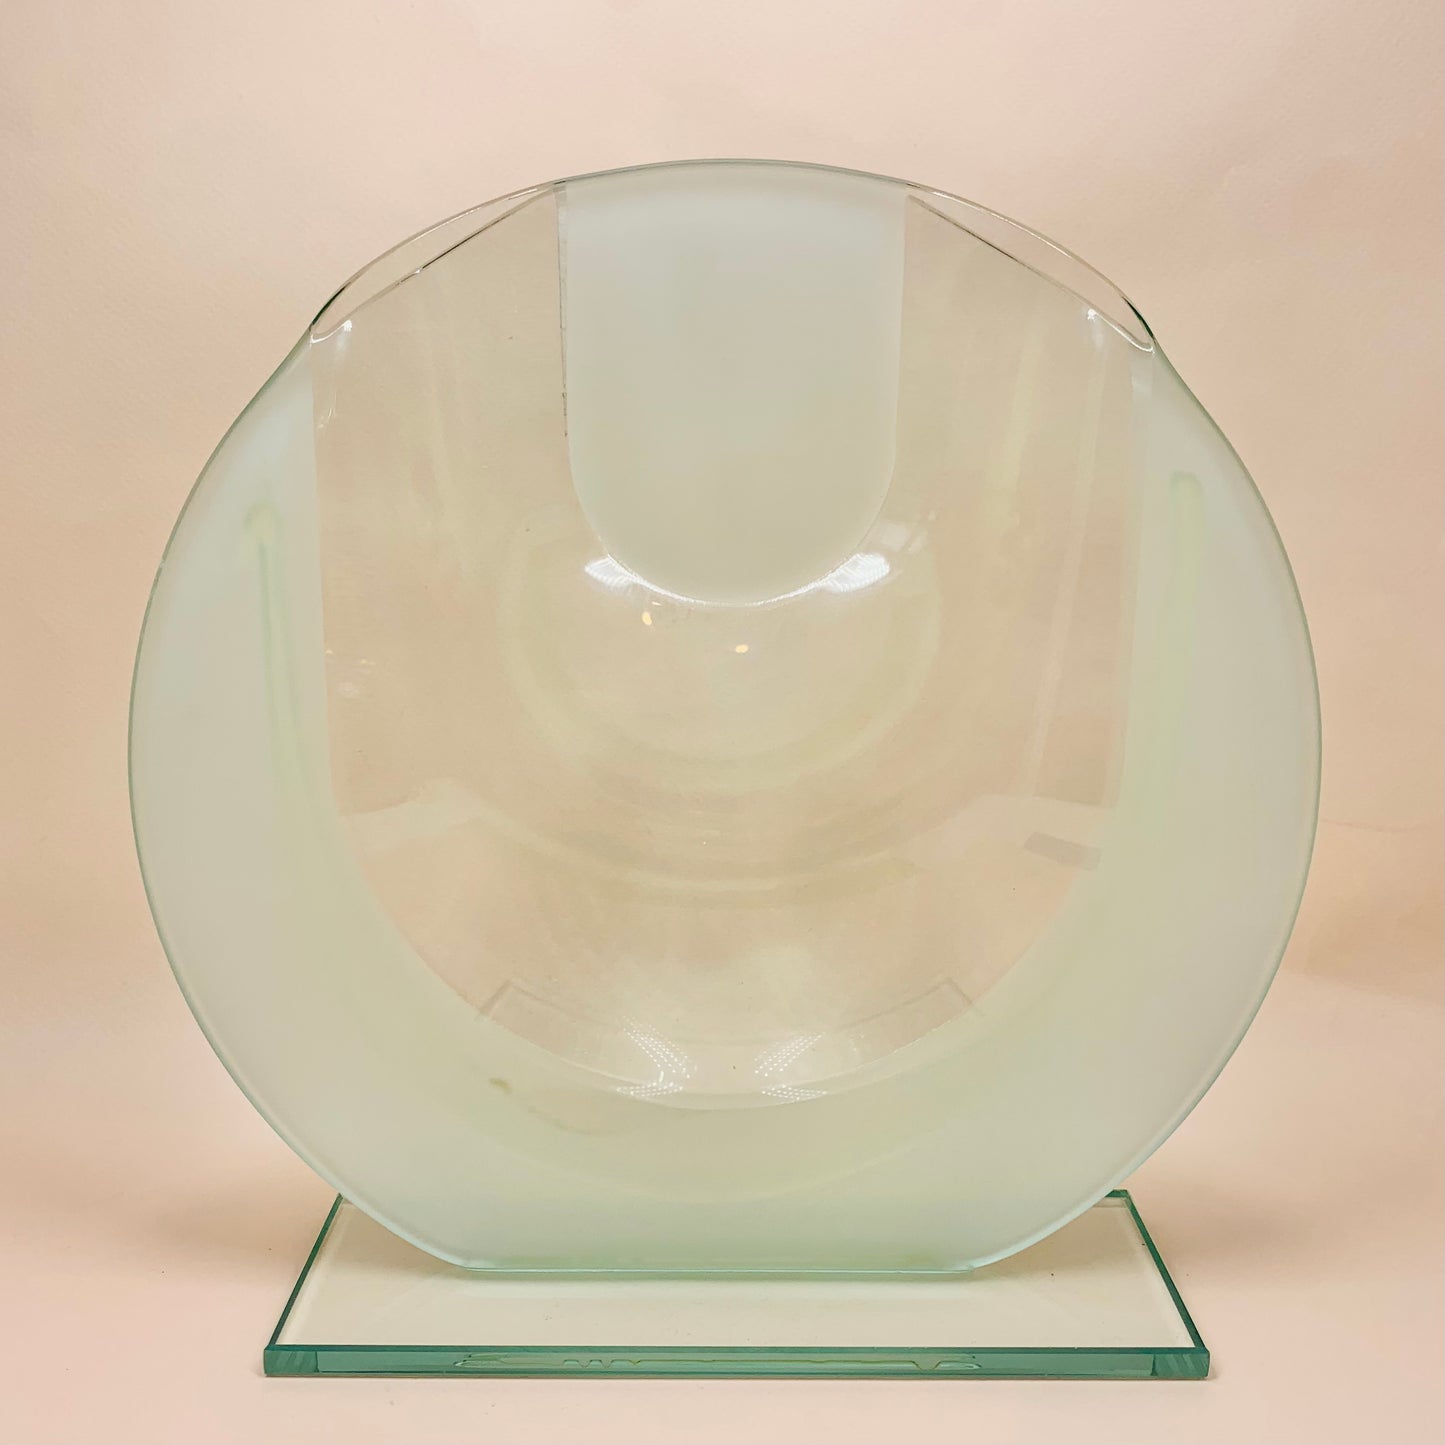 Extremely rare 1980s vintage art glass sheet vase